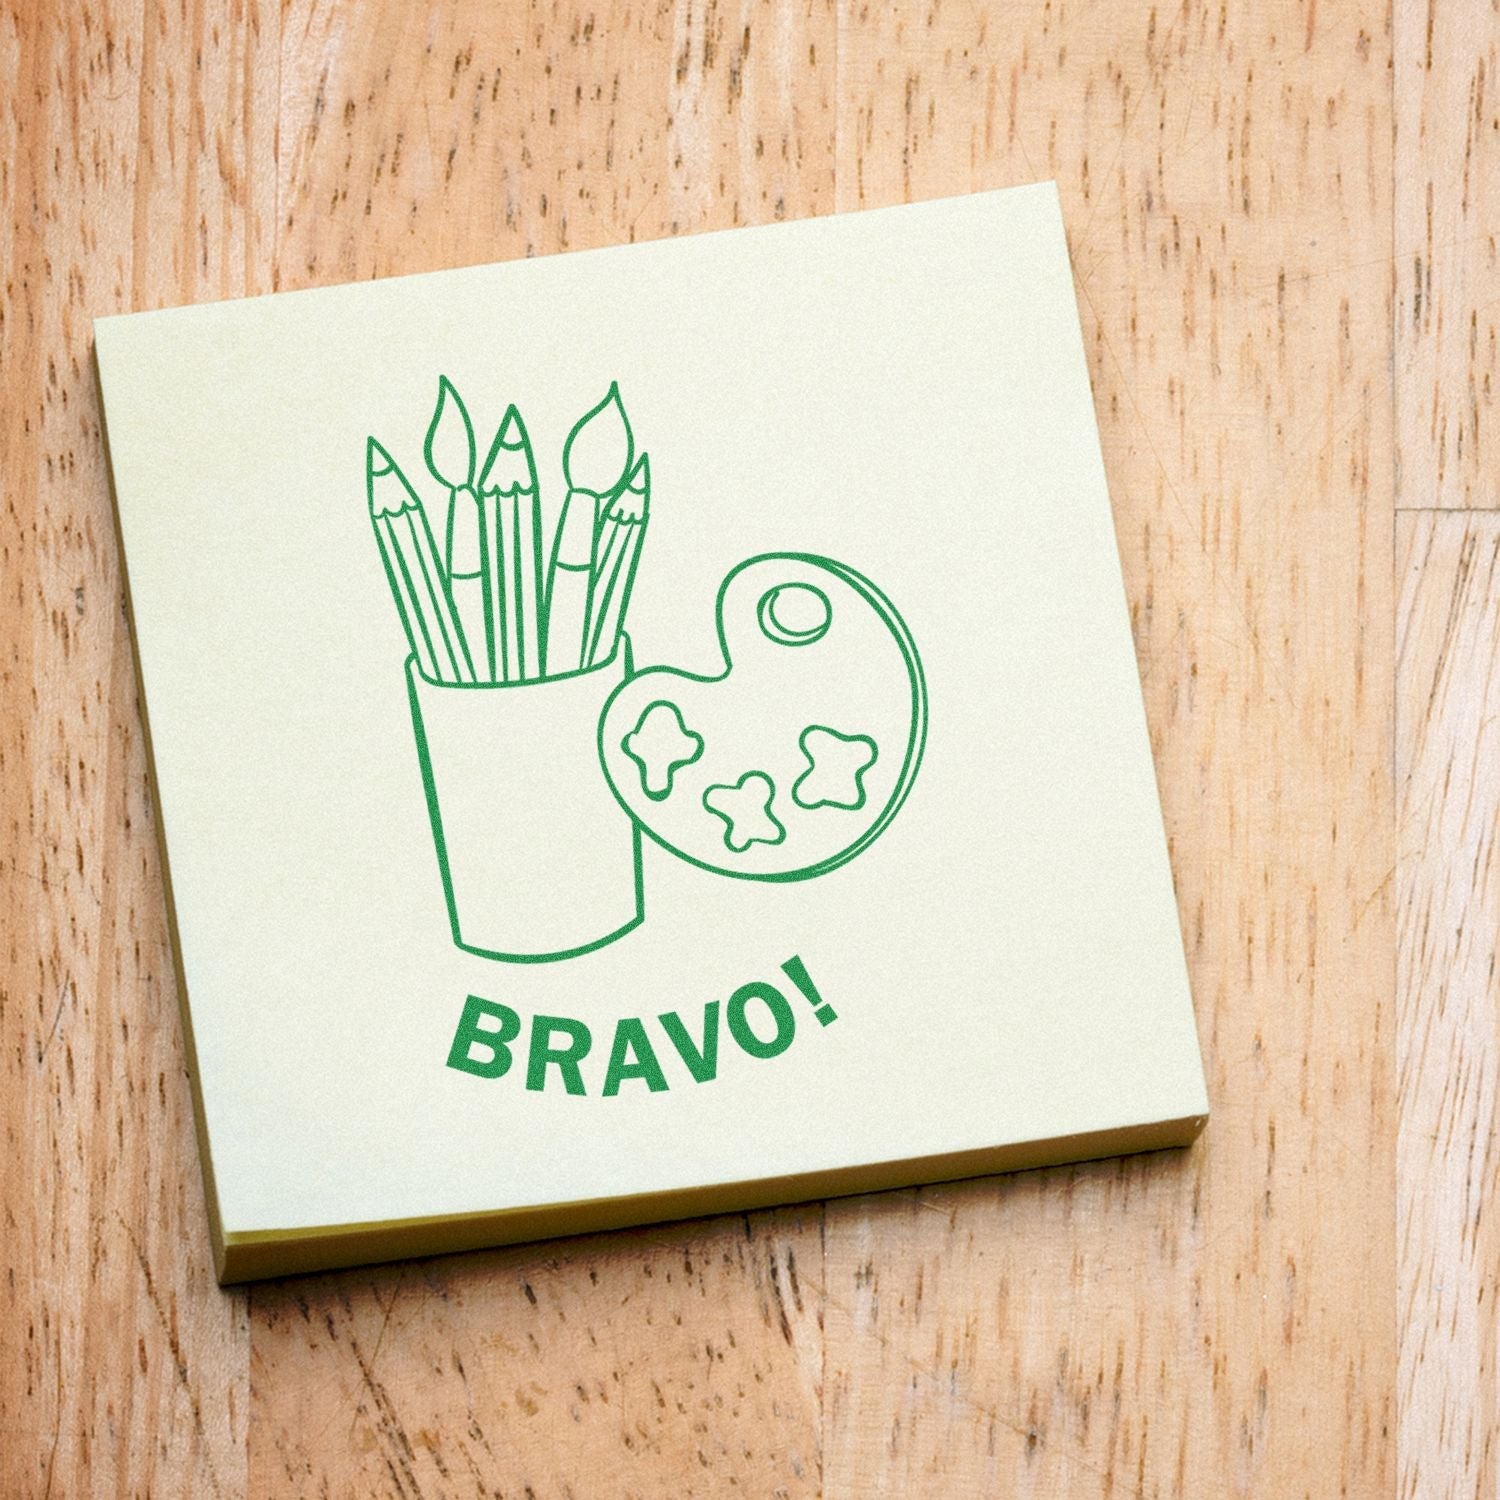 Self-Inking Round Bravo Stamp In Use